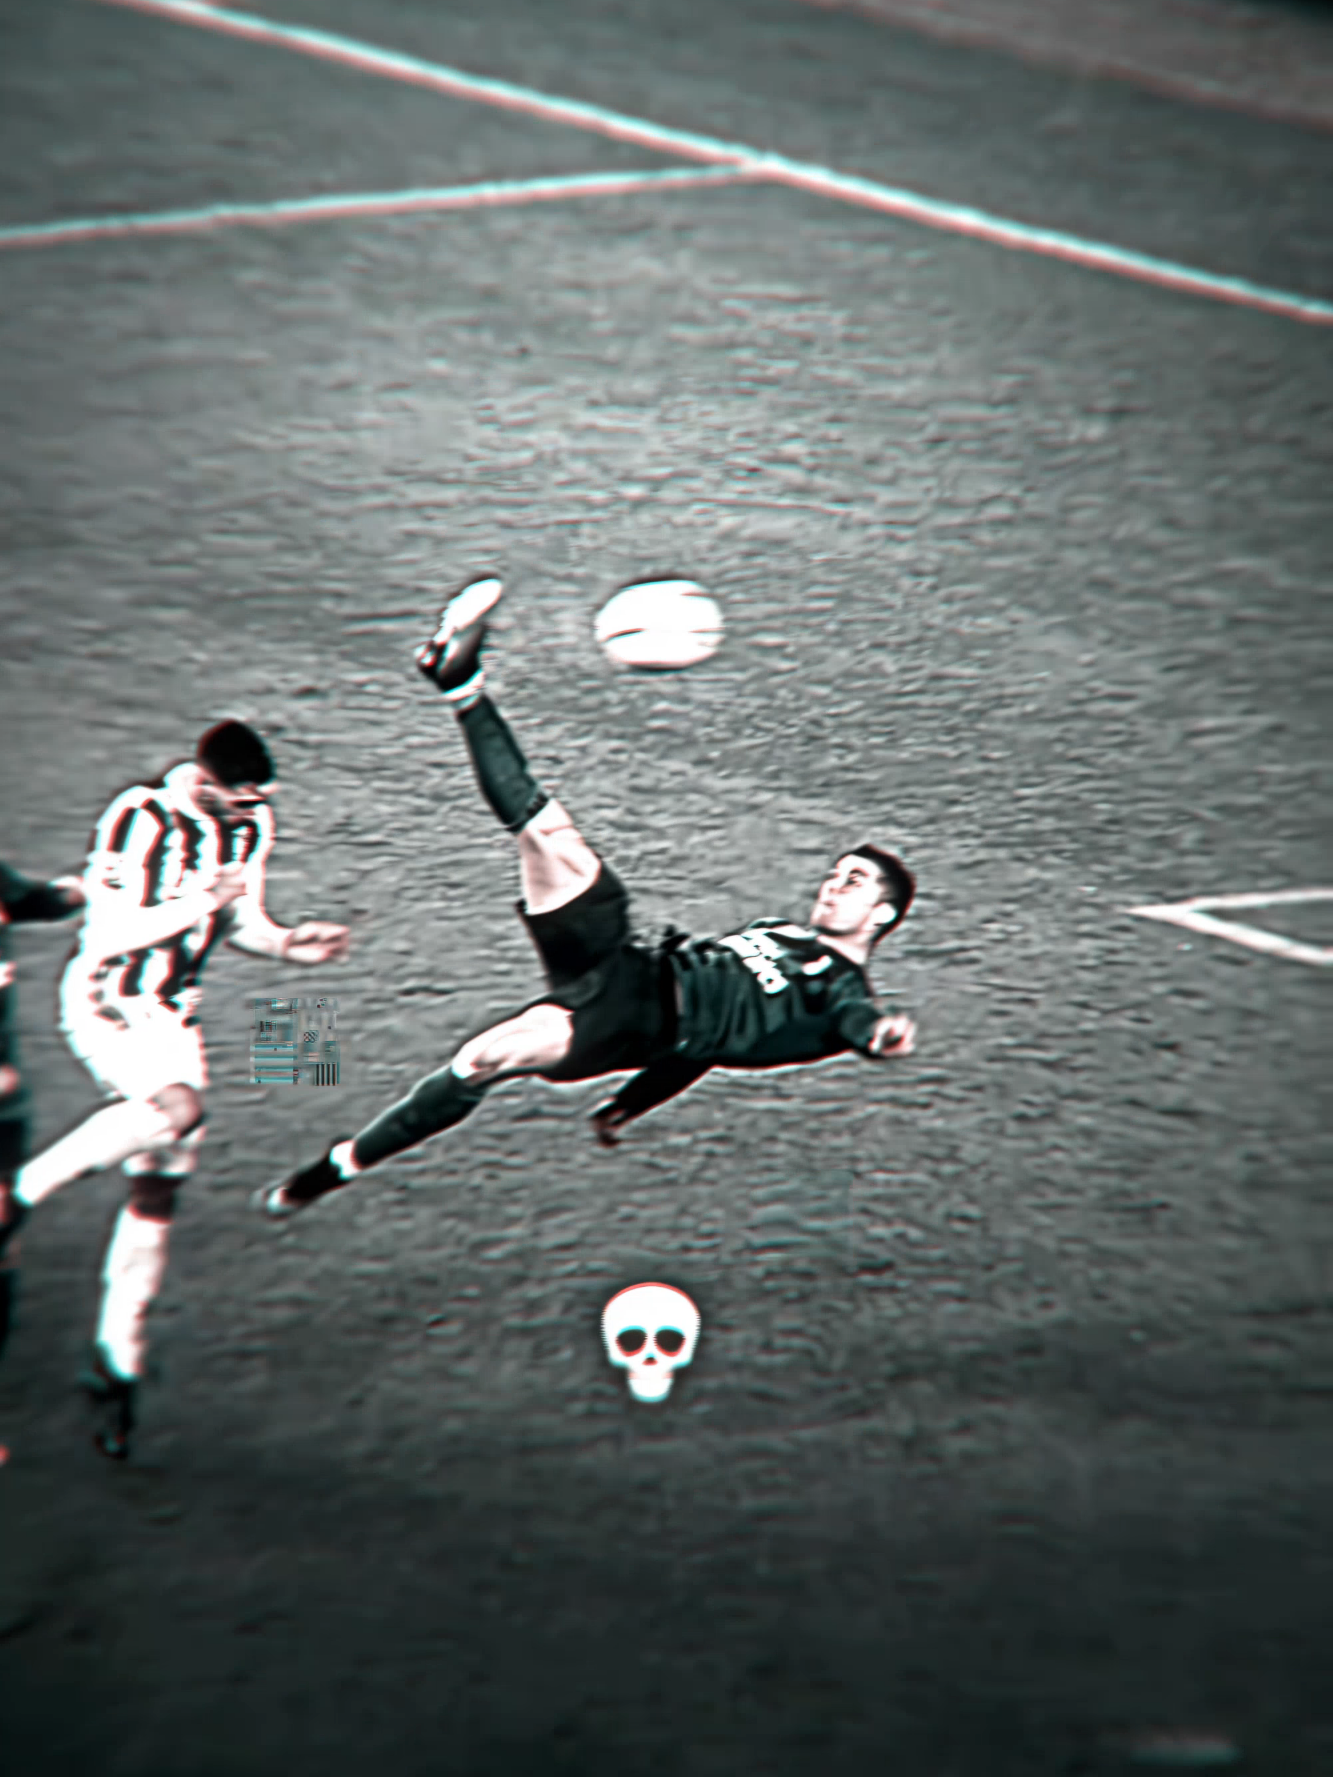 Ronaldo's best goal? (Ib @benzxma) #ronaldo#cr7#cristianoronaldo#realmadrid #aftereffects #viral #fyp #sigma